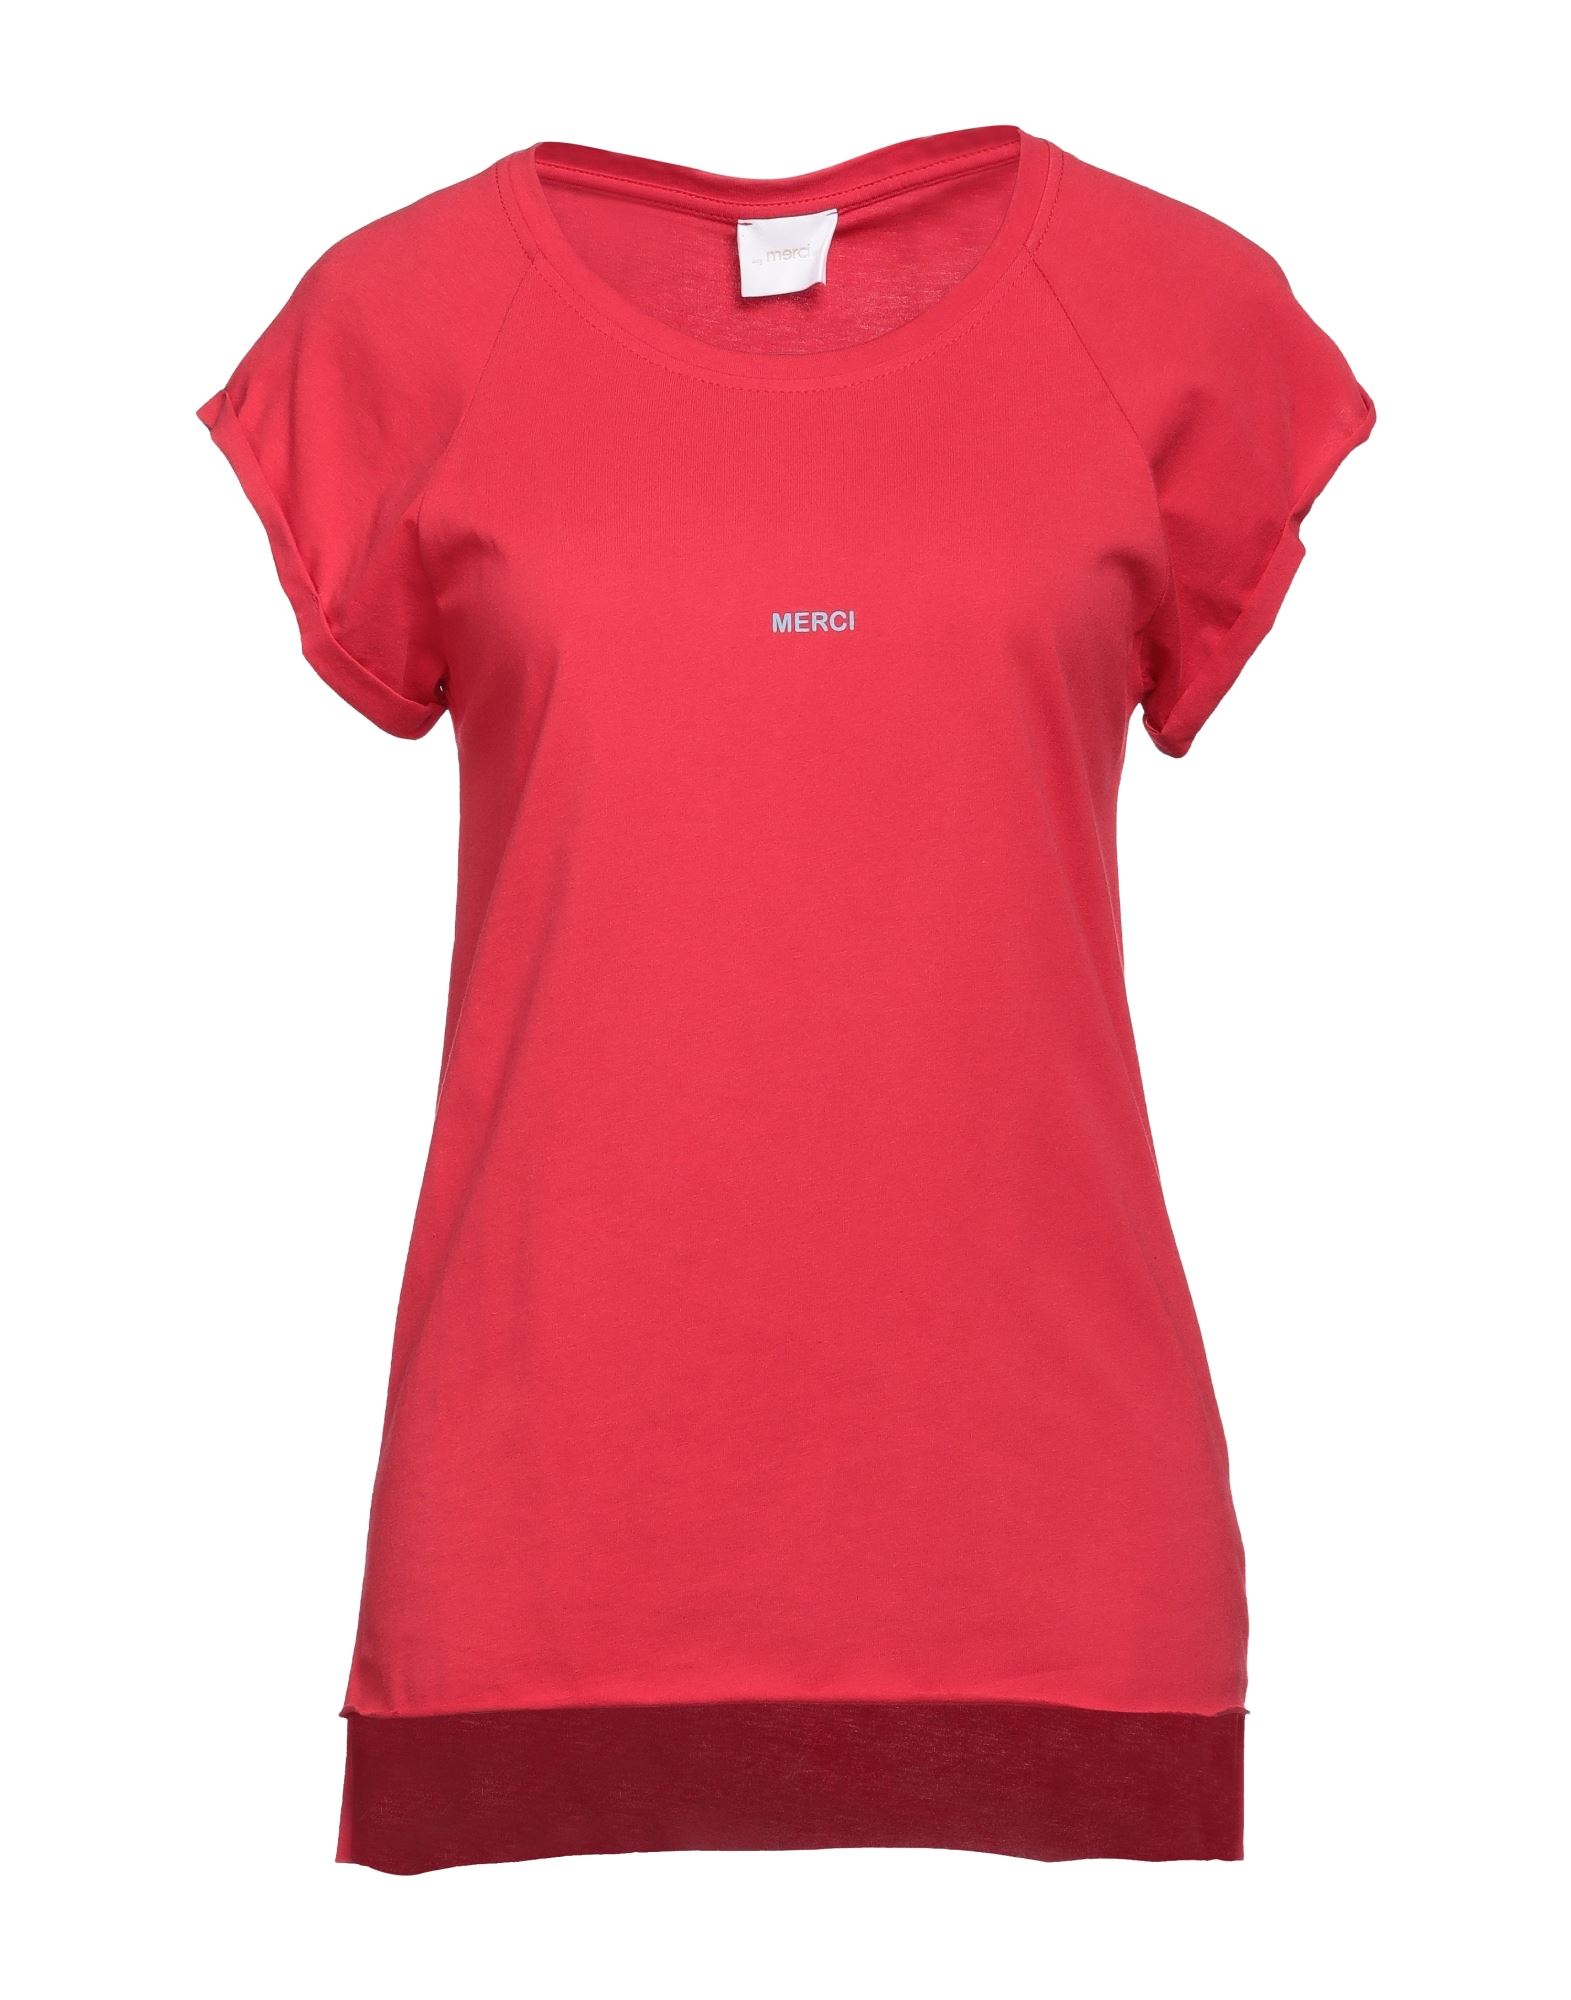 Merci .., Woman T-shirt Red Size M Cotton